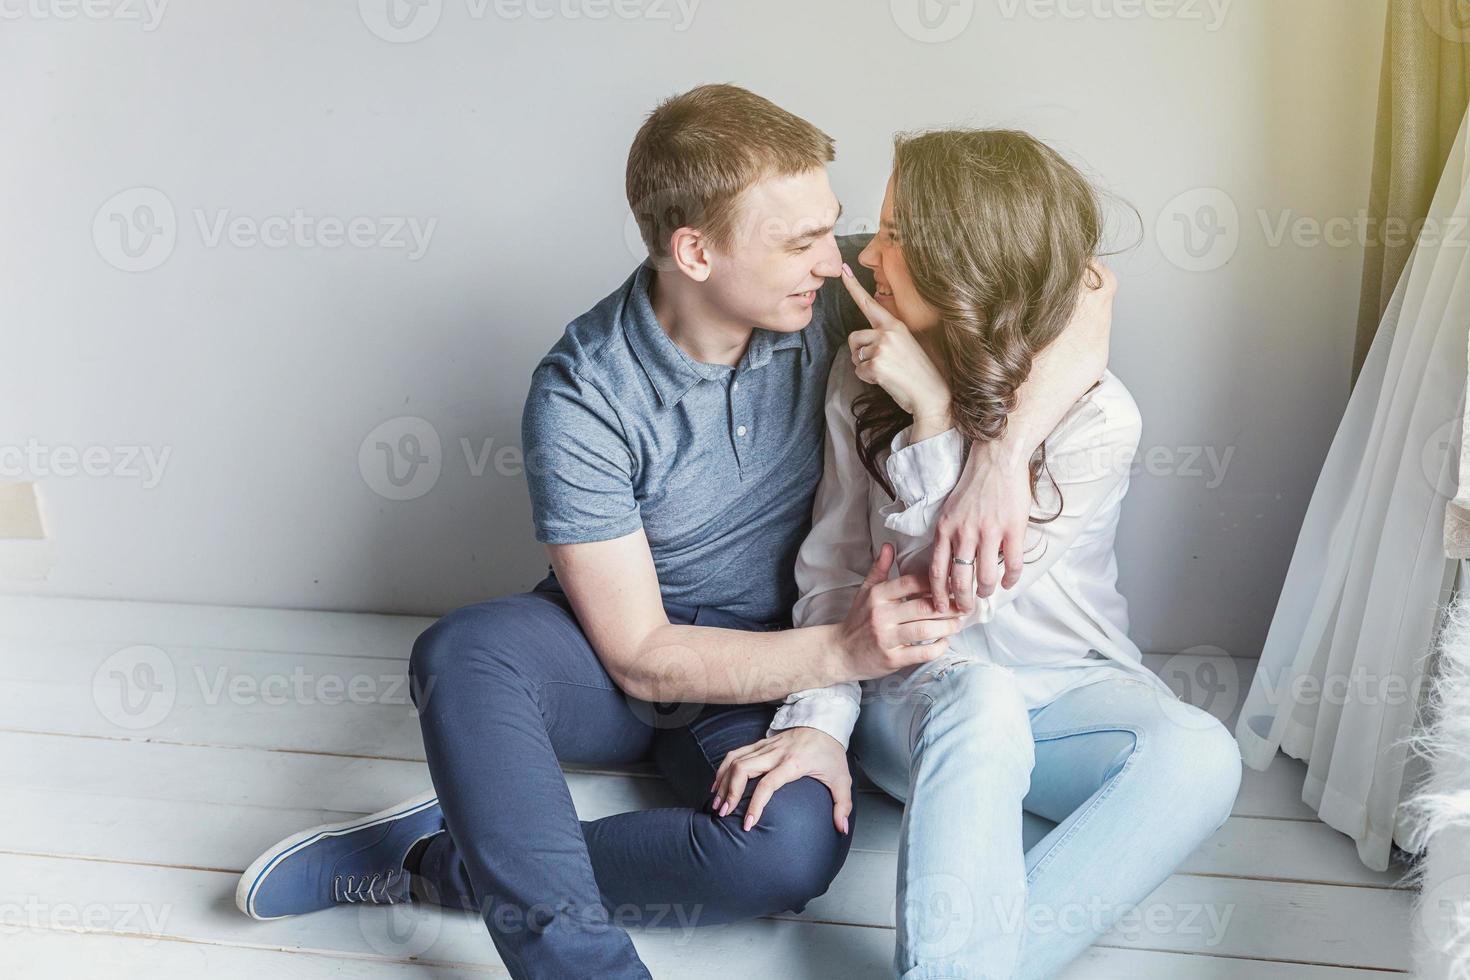 romântico casal sexy apaixonado se divertindo juntos. jovem abraçando namorado, fundo branco foto